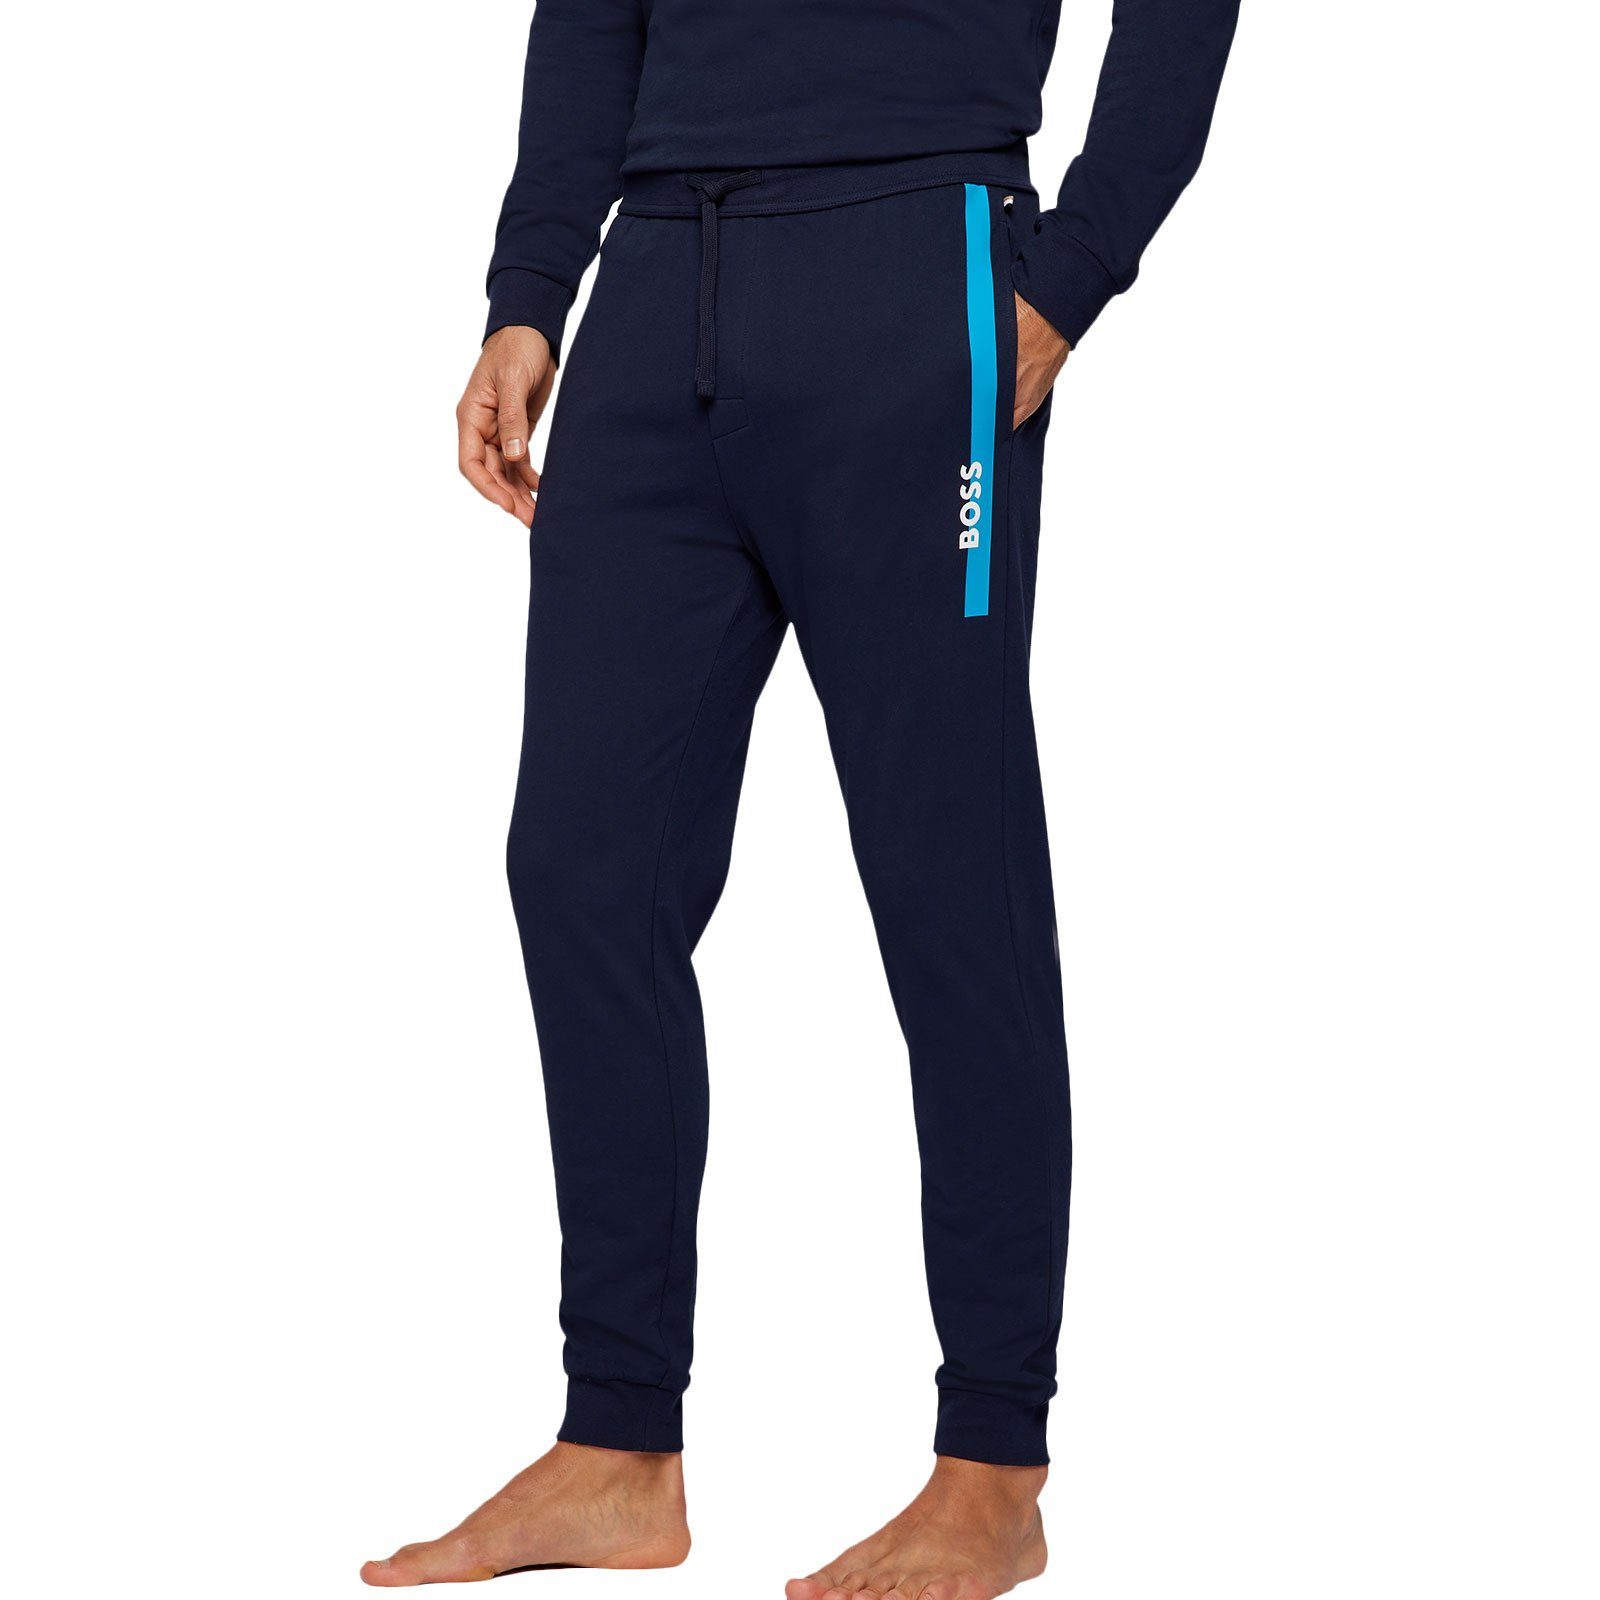 Authentic blue mit Bundhöhe Jogginghose mittlerer 403 BOSS Pants dark